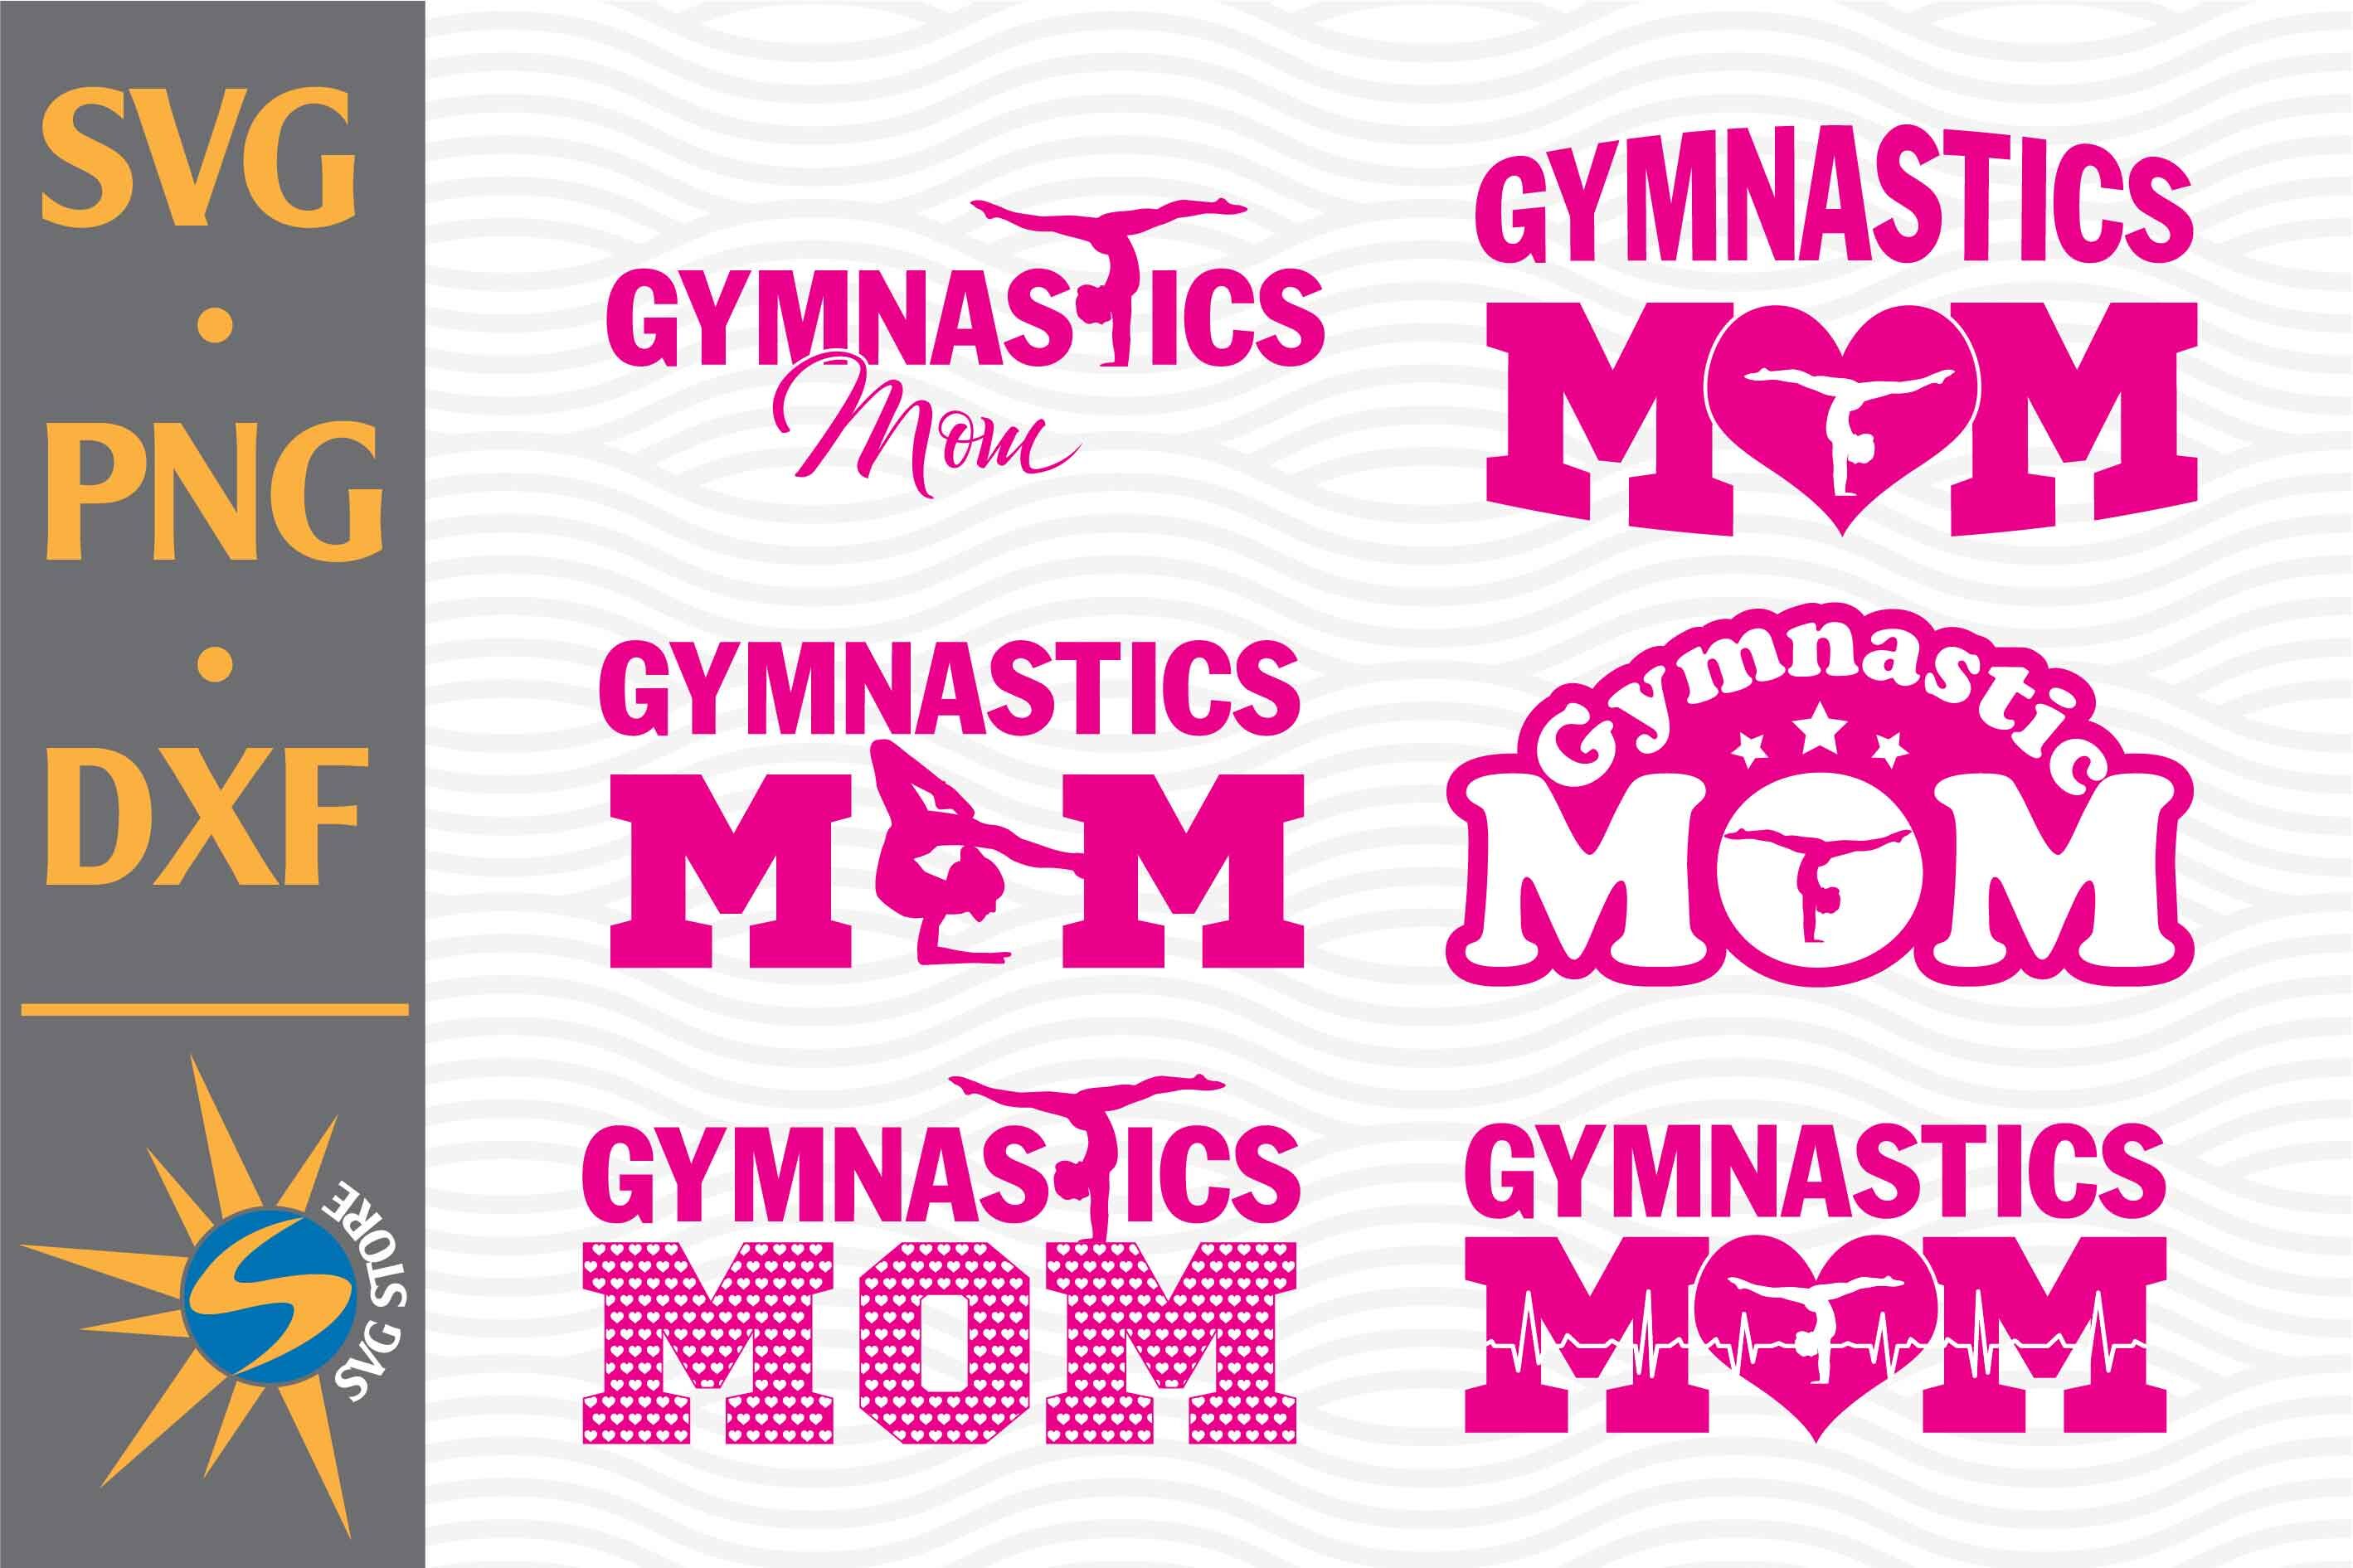 Gymnastics Mom SVG, PNG, DXF Digital Files Include By SVGStoreShop